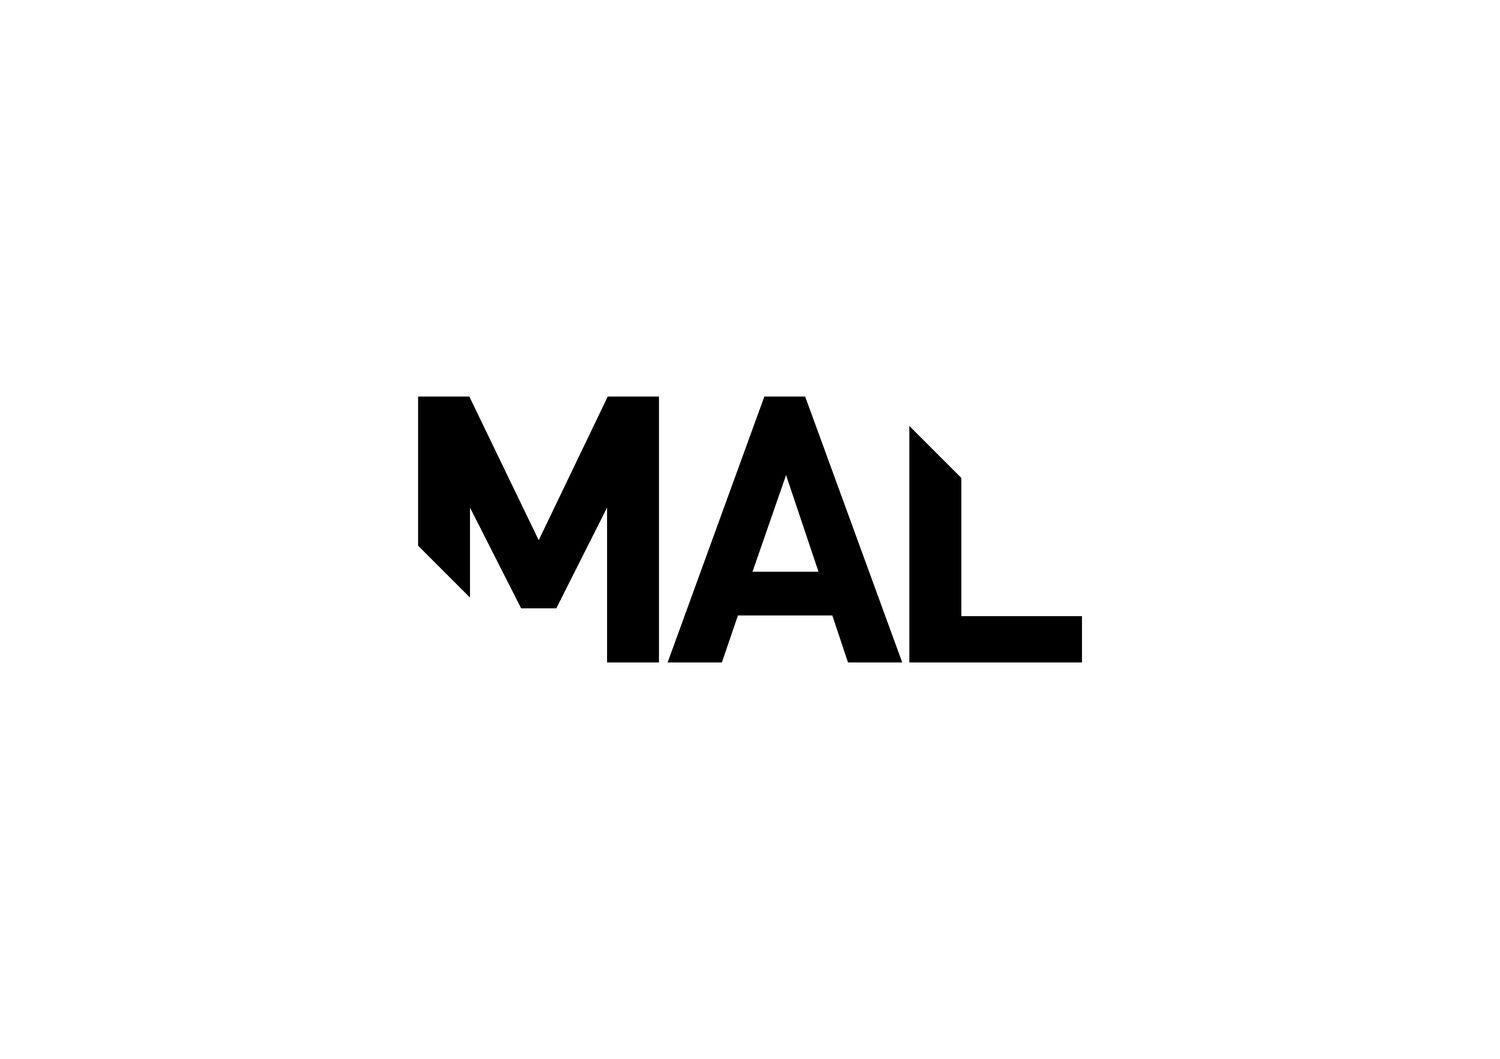 Mal Logo - MAL — The Portfolio of Yves Laroque